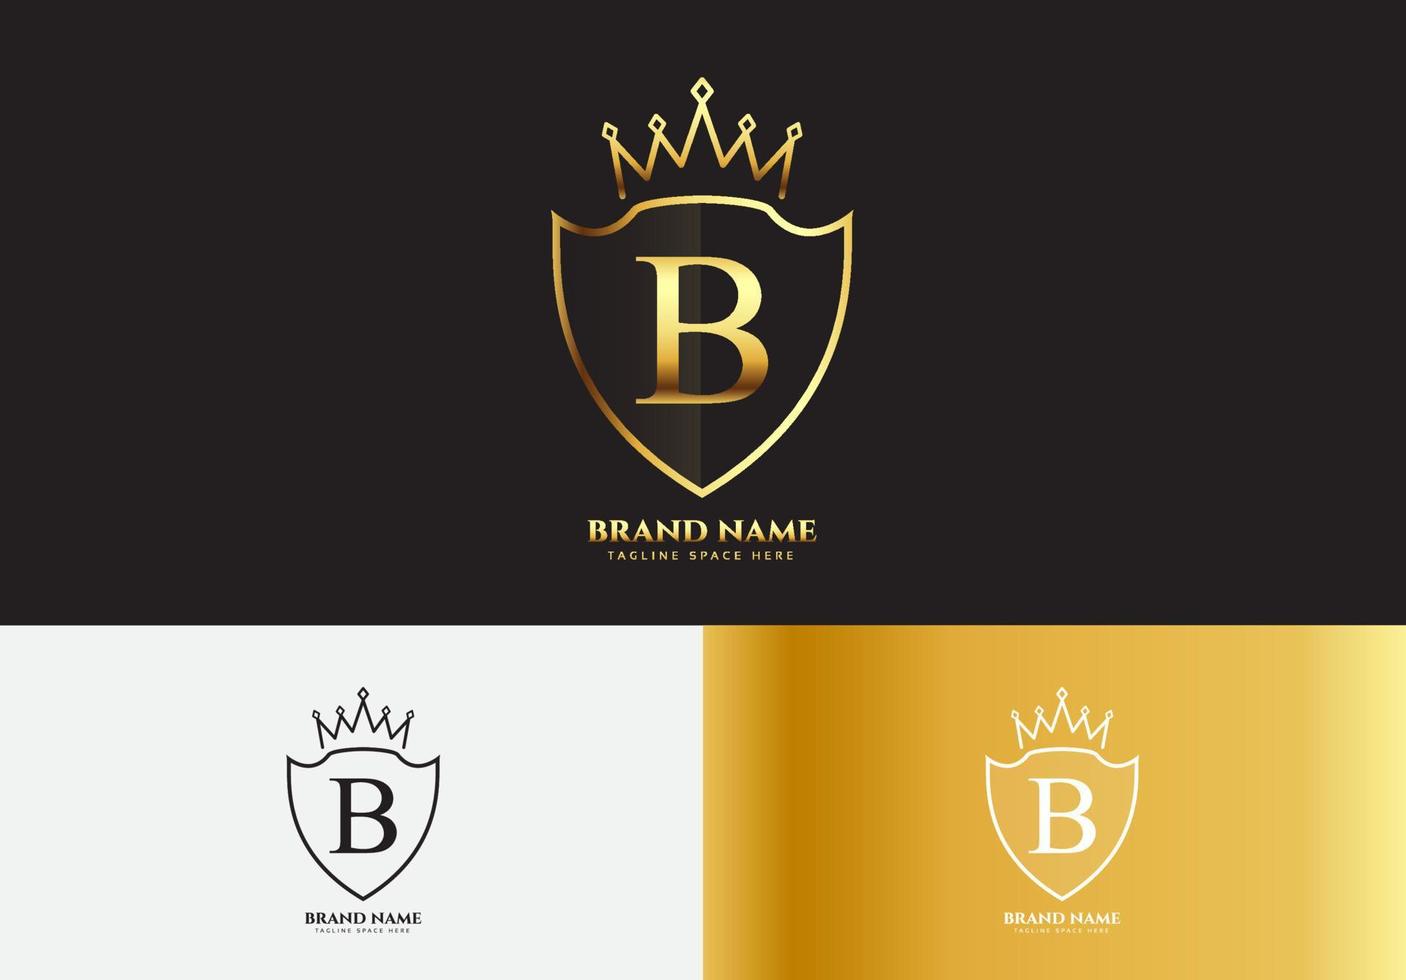 Letra b oro concepto de logotipo de corona de lujo vector